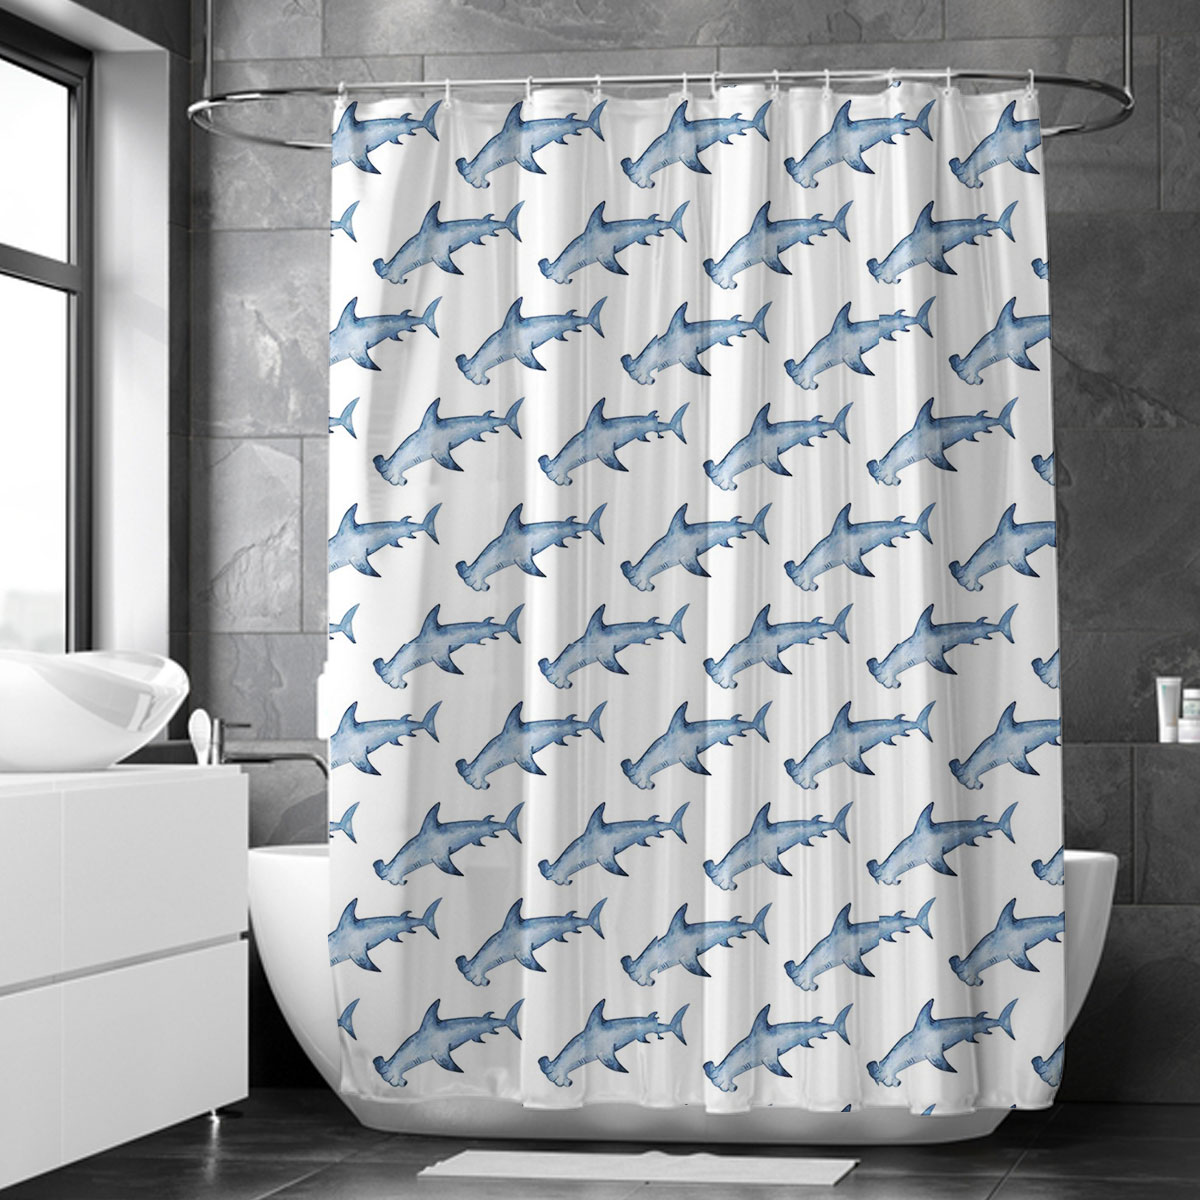 Hammerhead Shark Shower Curtain